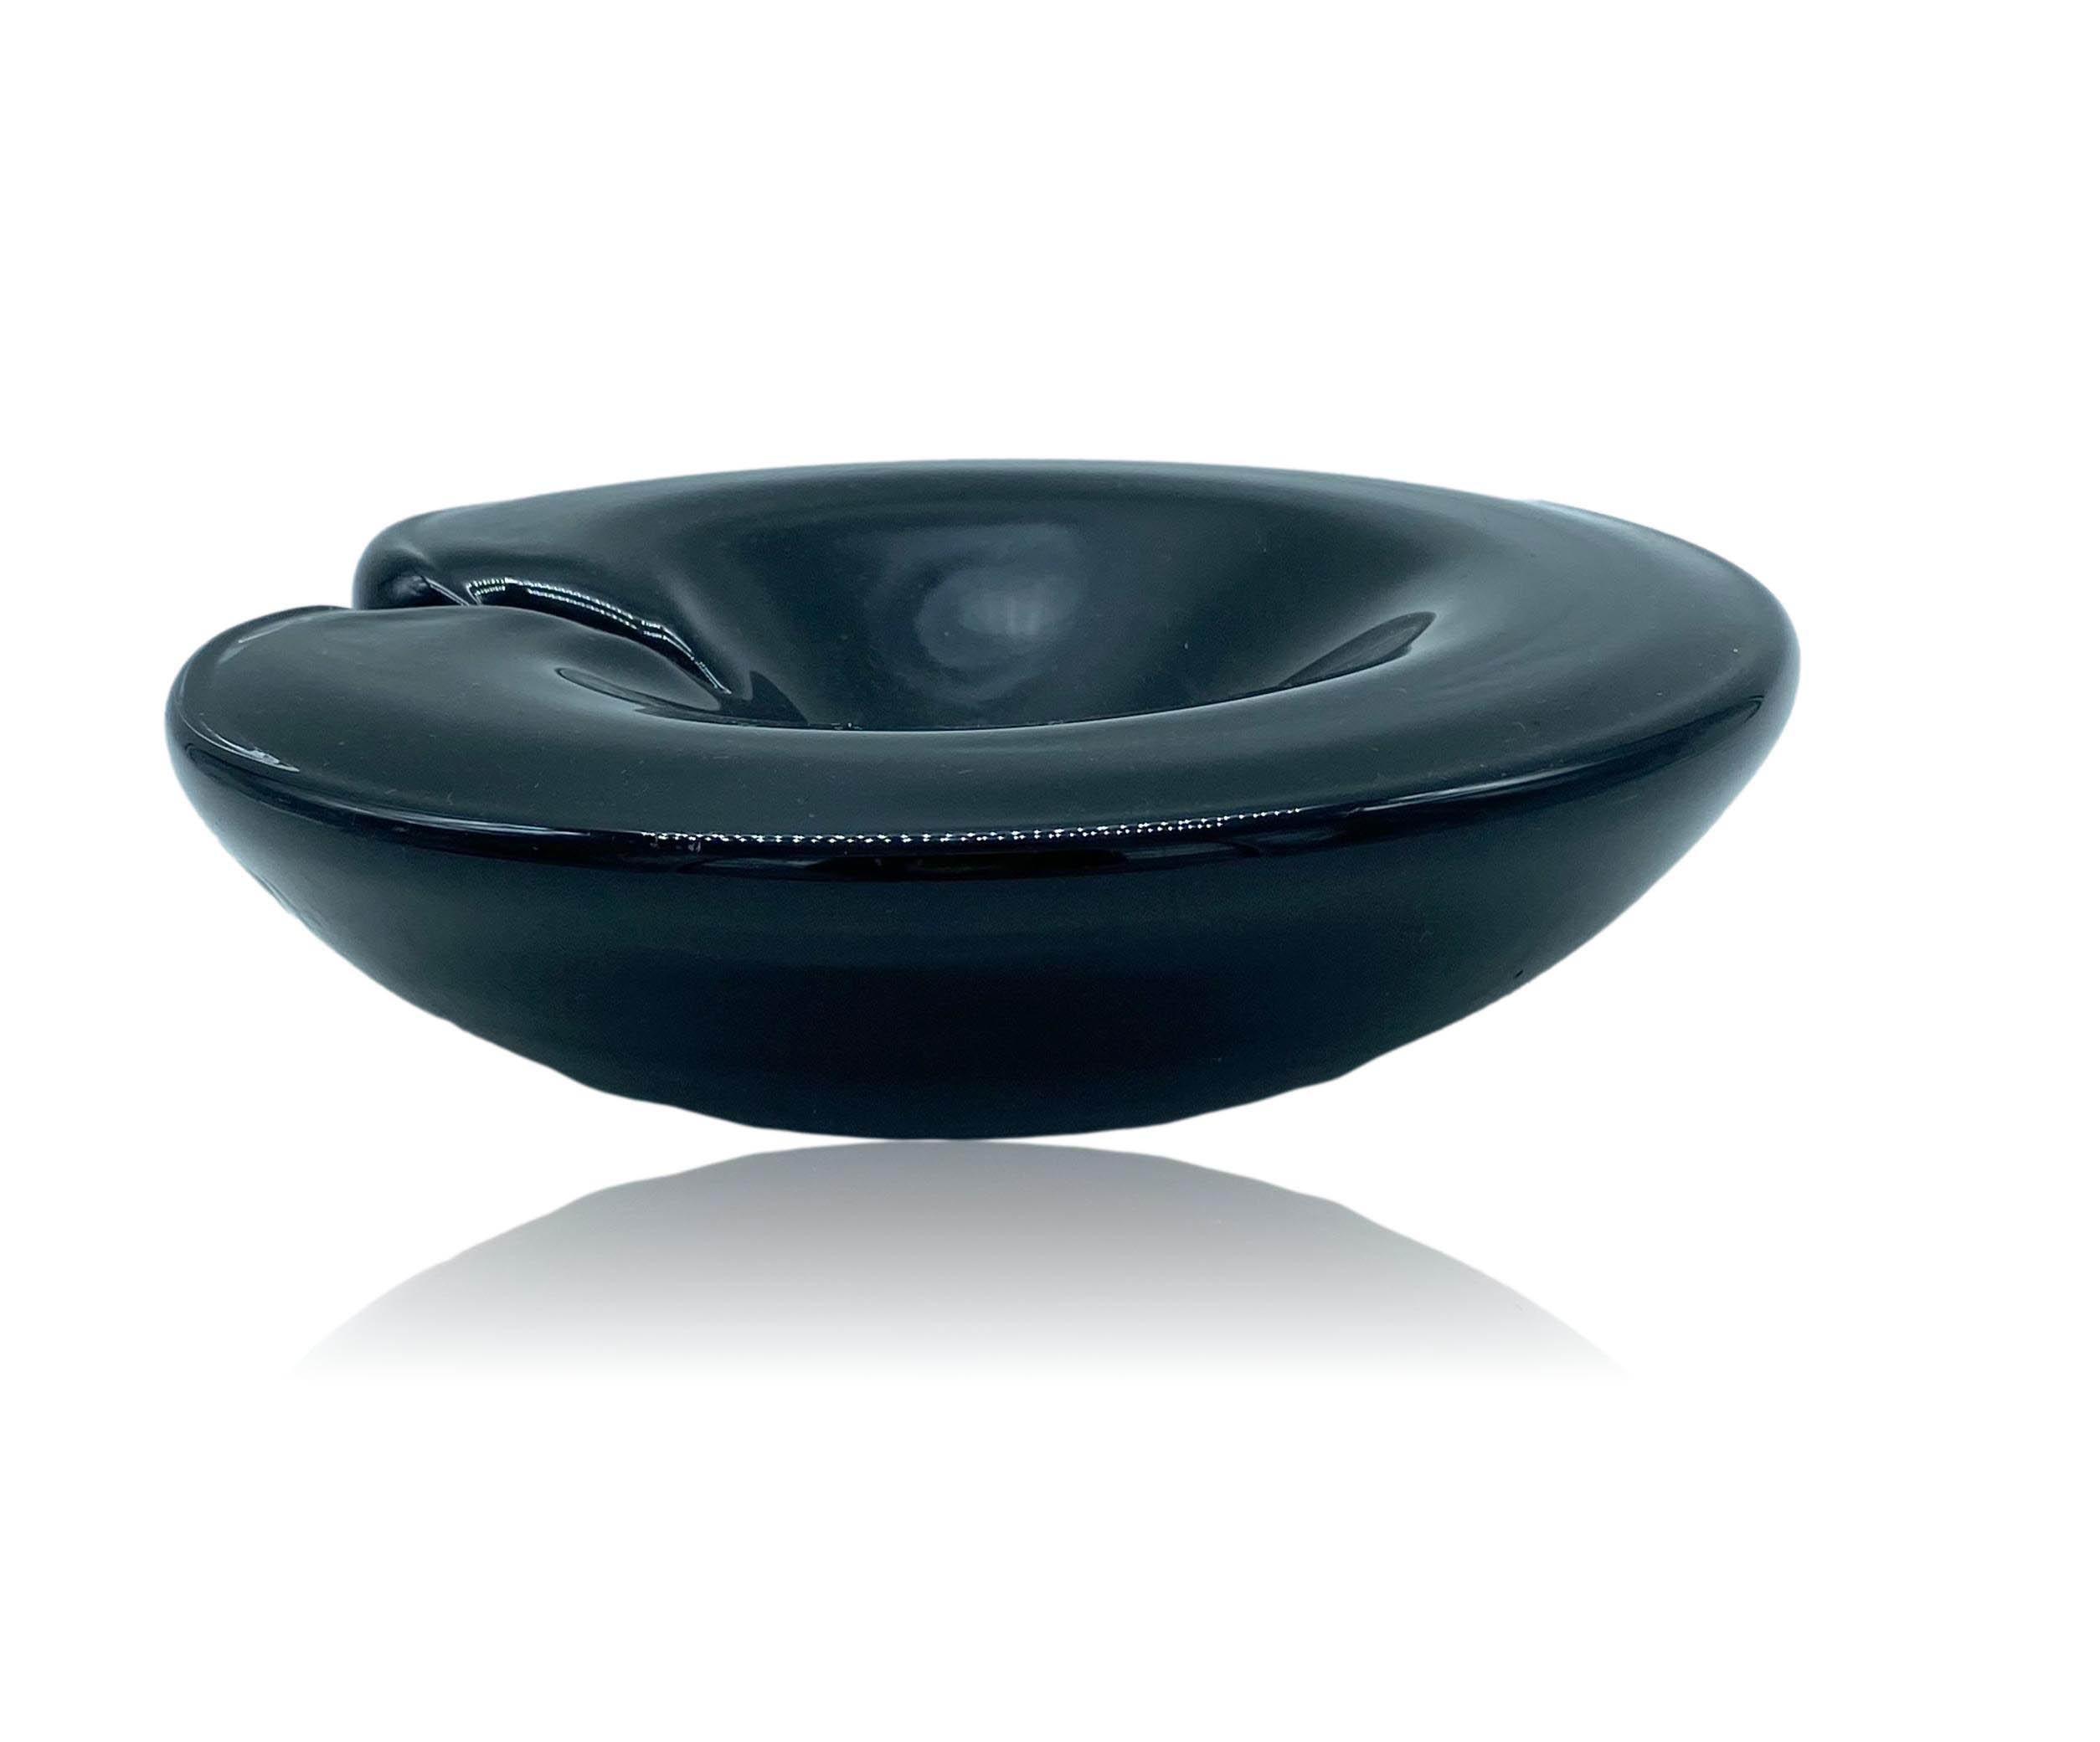 Rare and beautiful centerpiece ashtray in Murano glass Archimede Seguso 1970, round black color. With label.